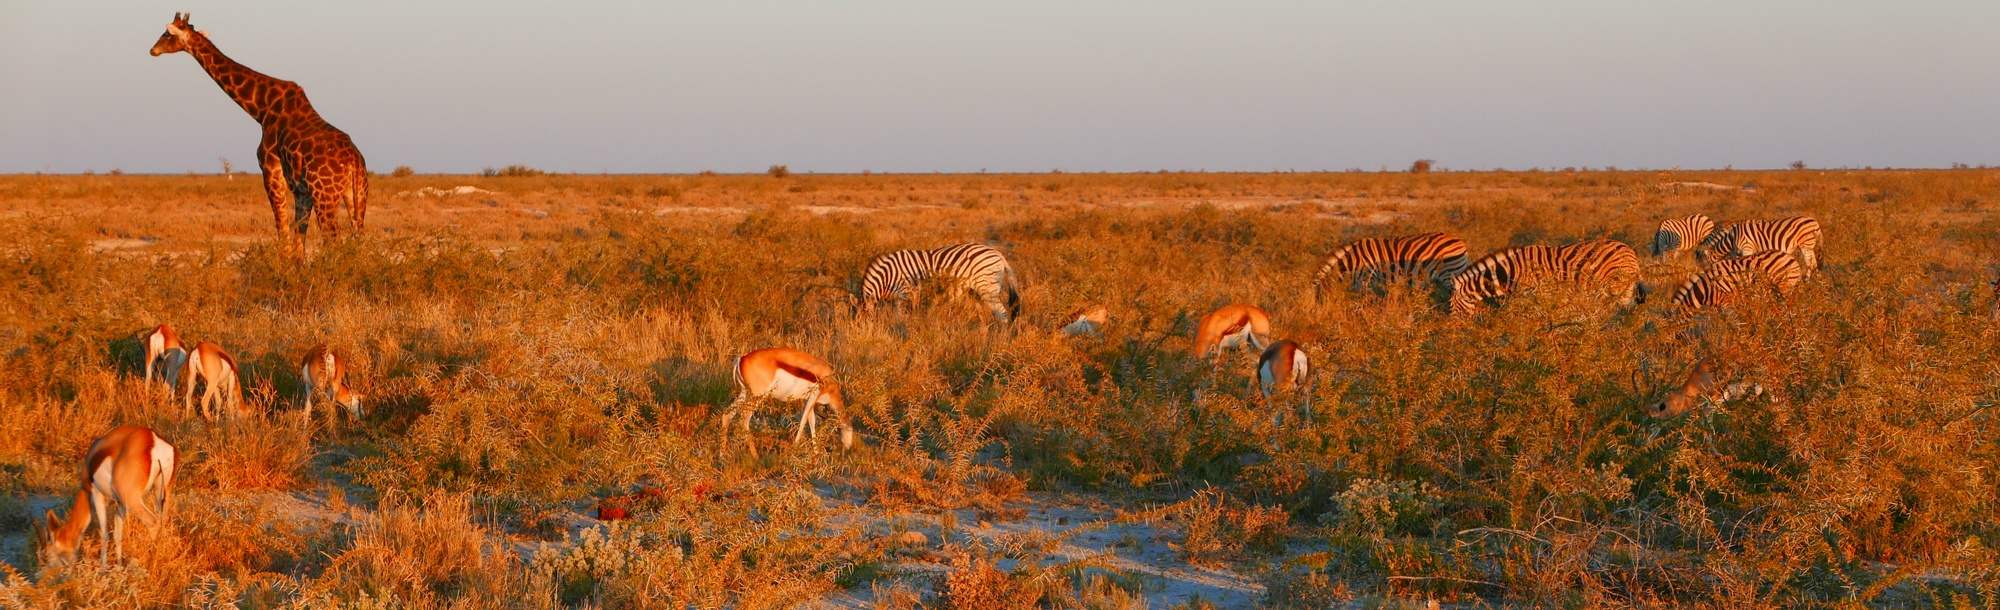 Etosha National Park in Nambia